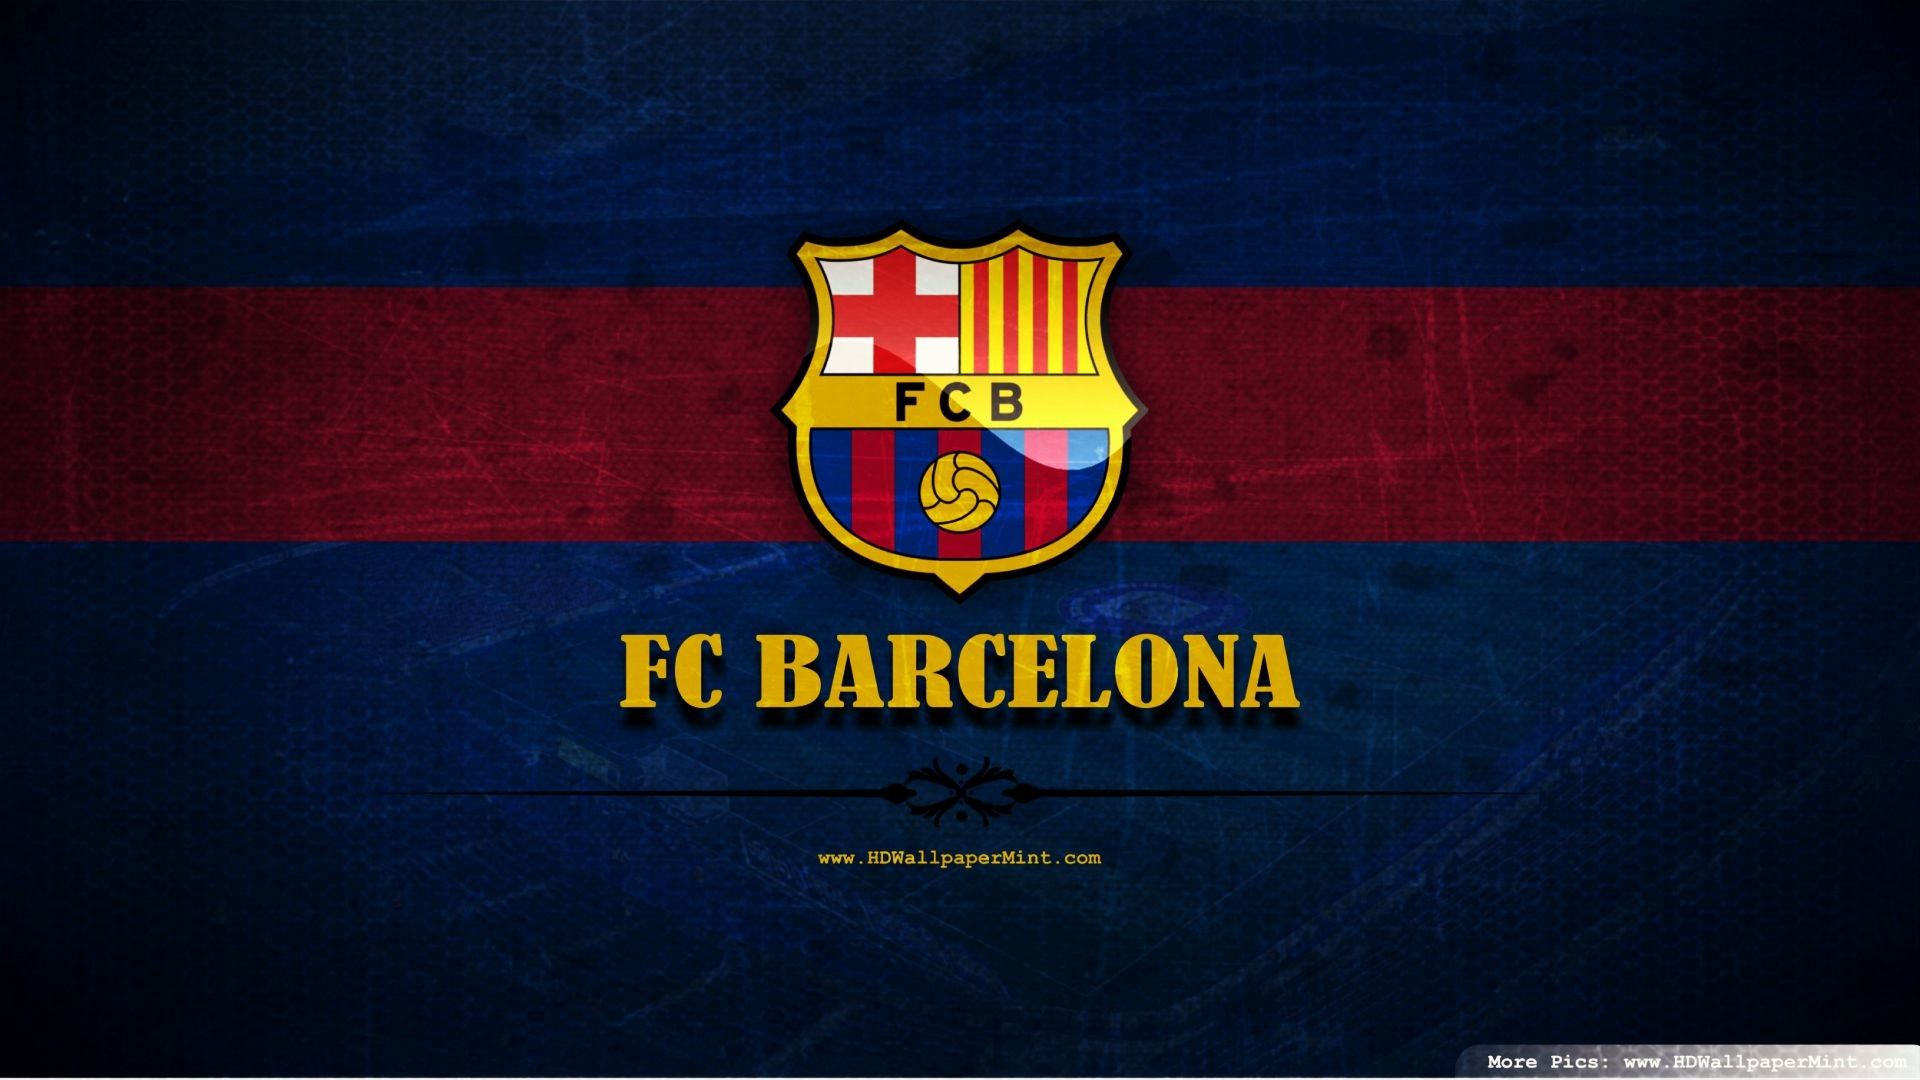 Futbol club barcelona Wallpapers Download | MobCup